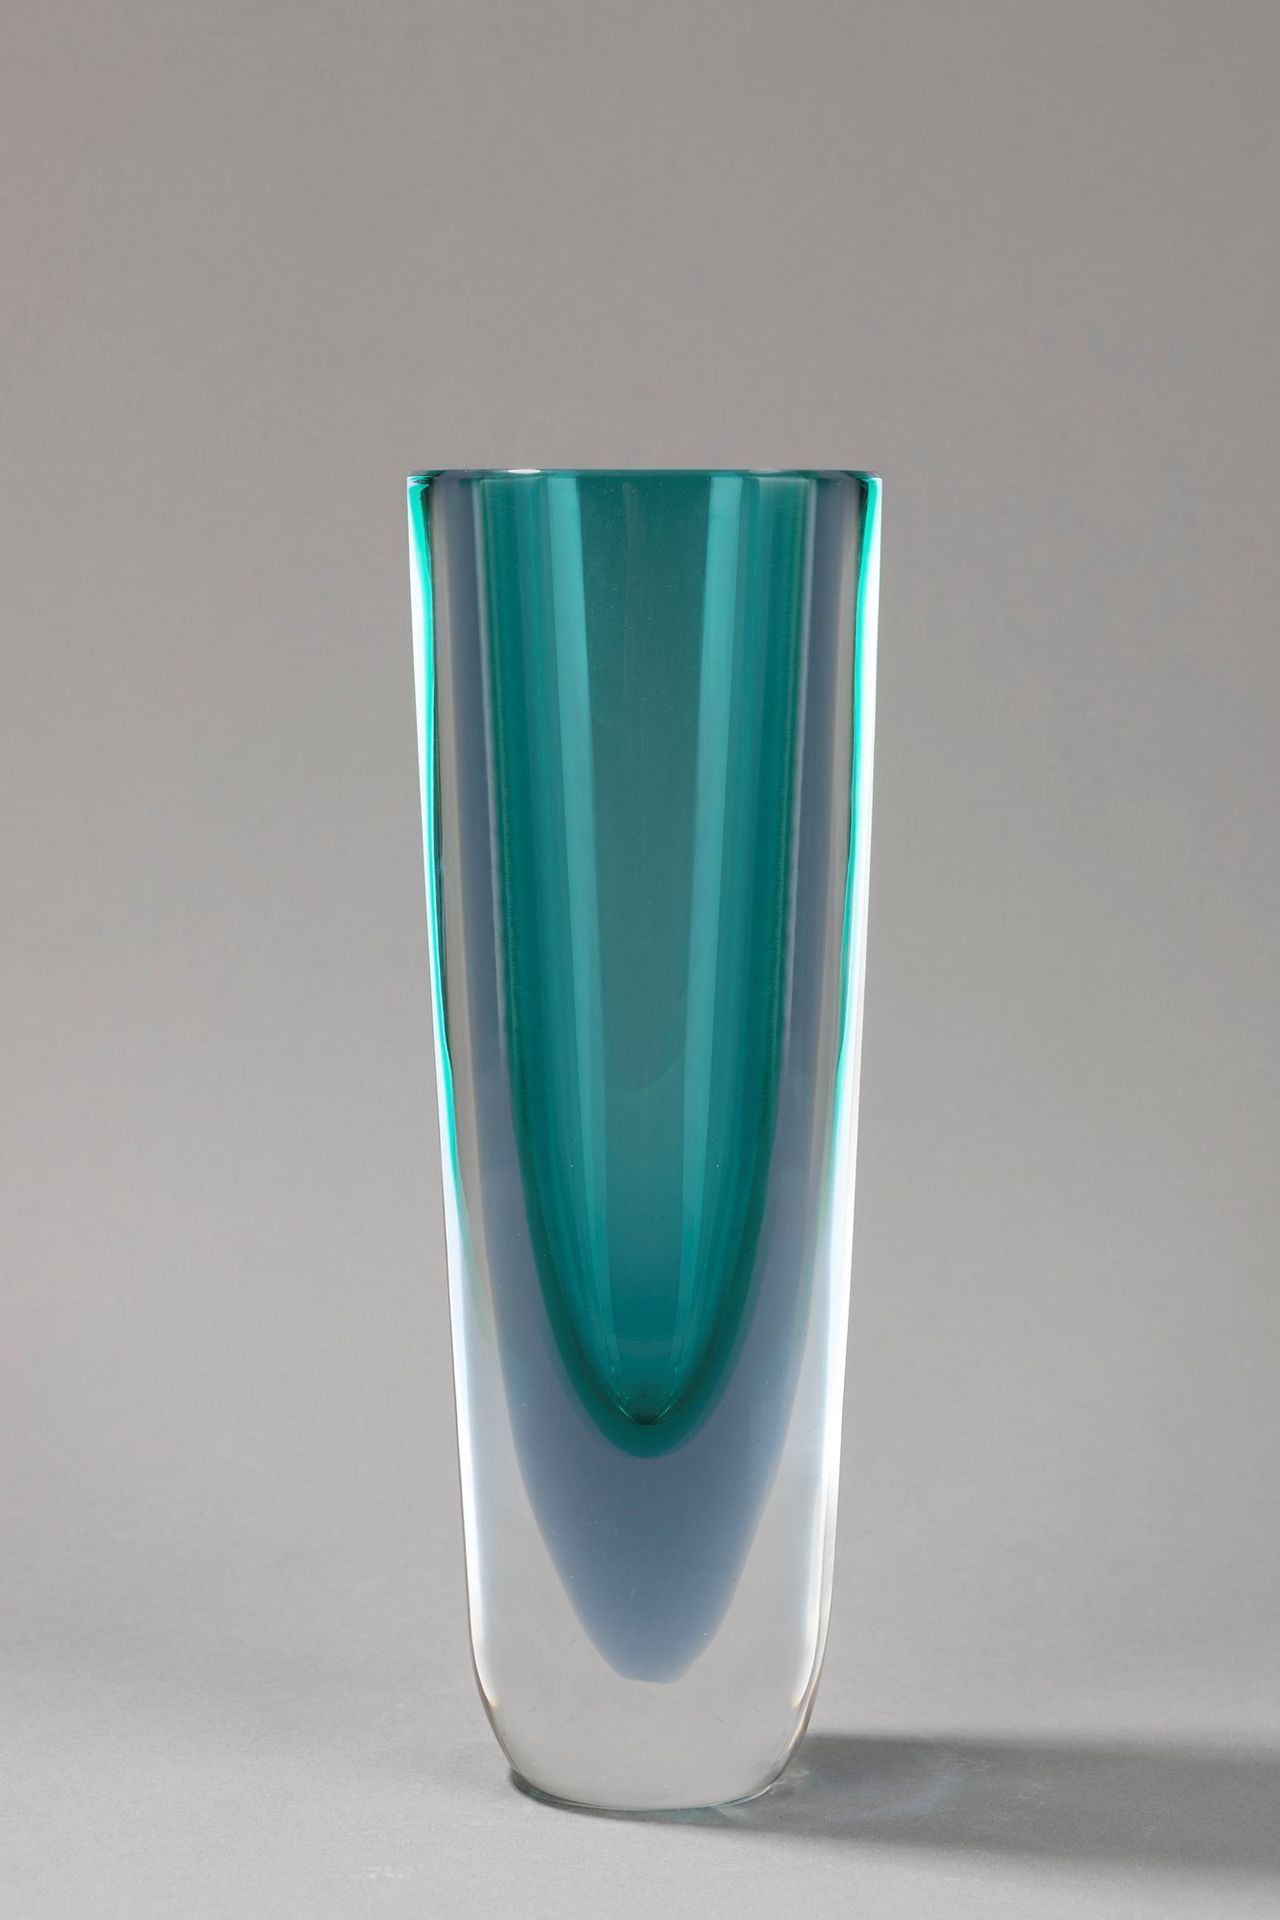 Seguso (attr.) Vase, 1950 ca.

H 30 x 12 x 6 cm
sommerso glass